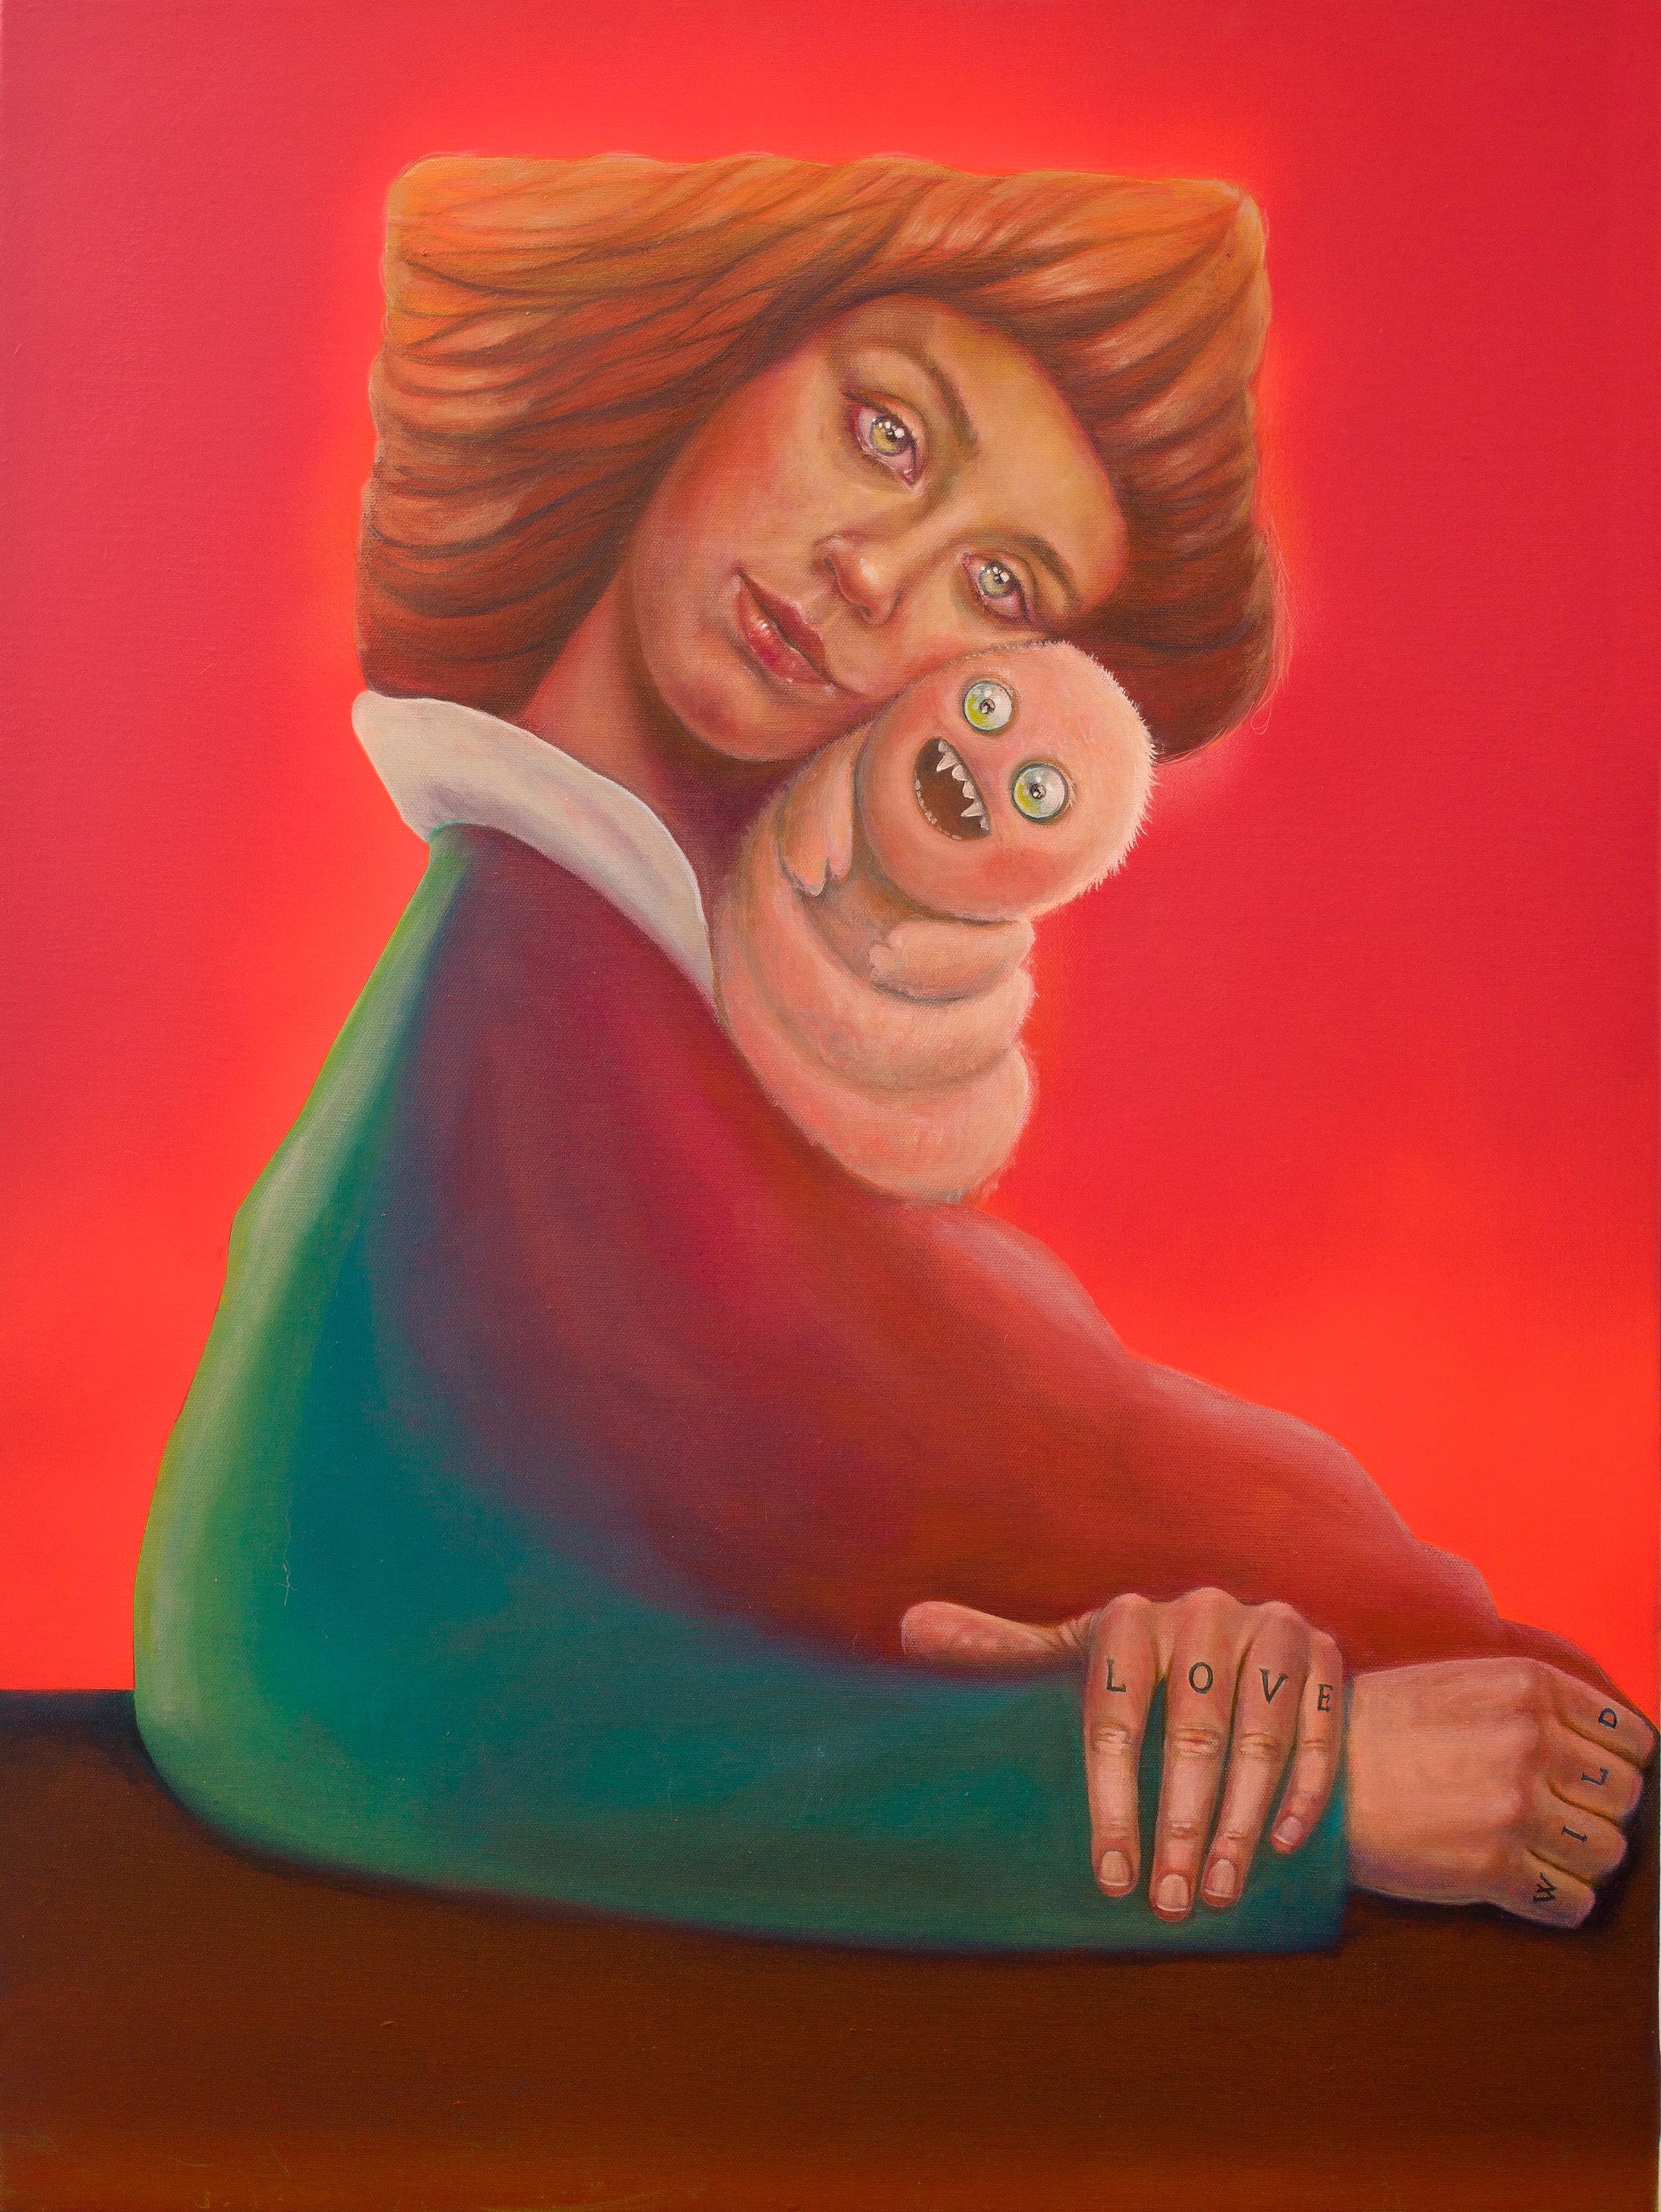 Natasha Lelenco Figurative Painting – "Love Wild" - Contemporary Pop Surrealist Portrait mit niedlichem, kauzigem kleinen Monster